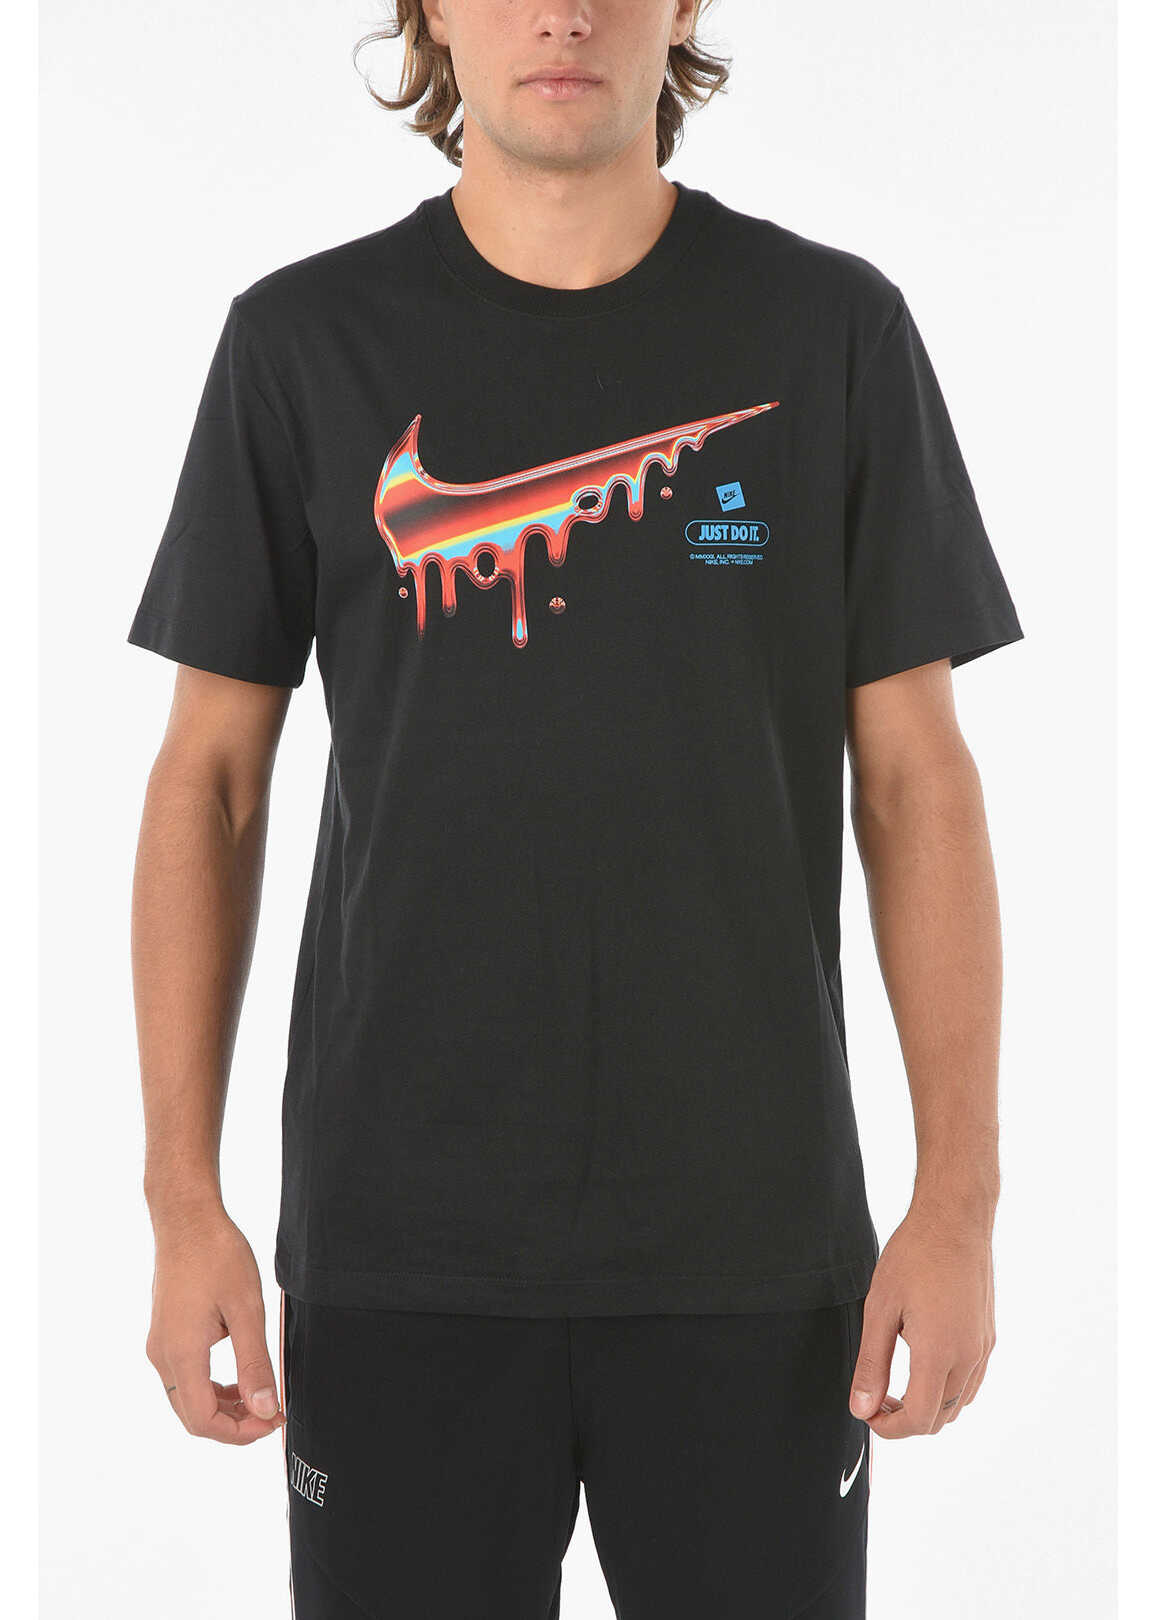 Nike Crew-Neck T-Shirt With Print Black image4